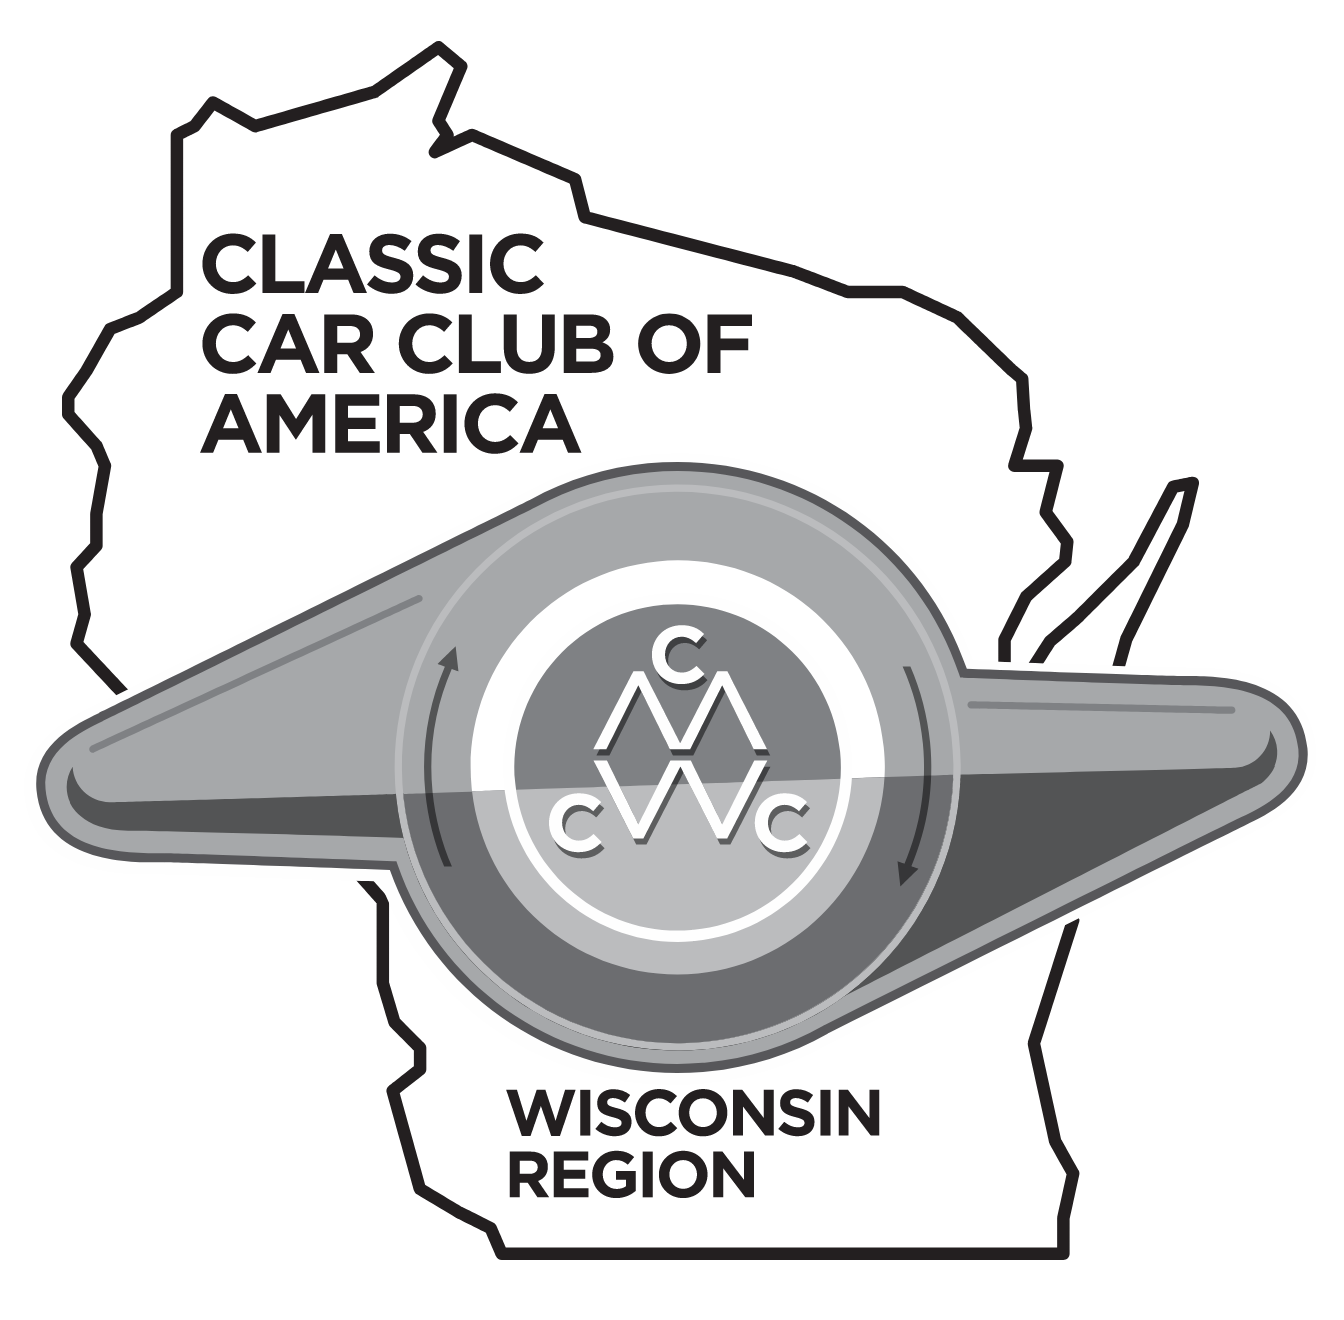 Wisconsin Region of the Classic Car Club of America